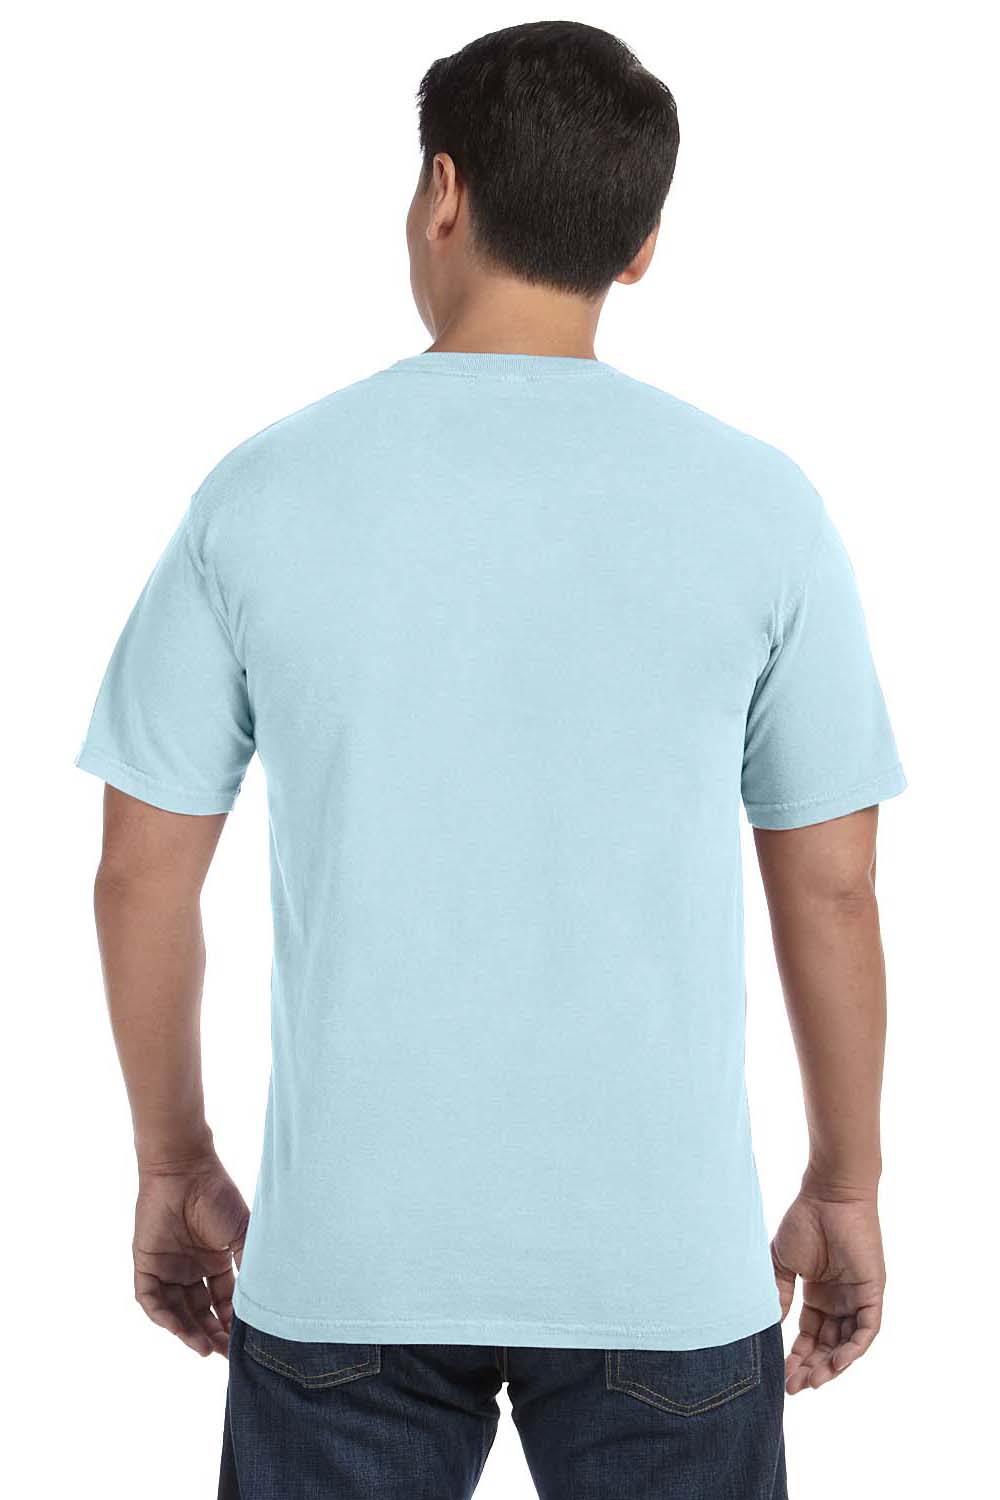 Comfort Colors C1717 Mens Short Sleeve Crewneck T-Shirt Chambray Blue Back